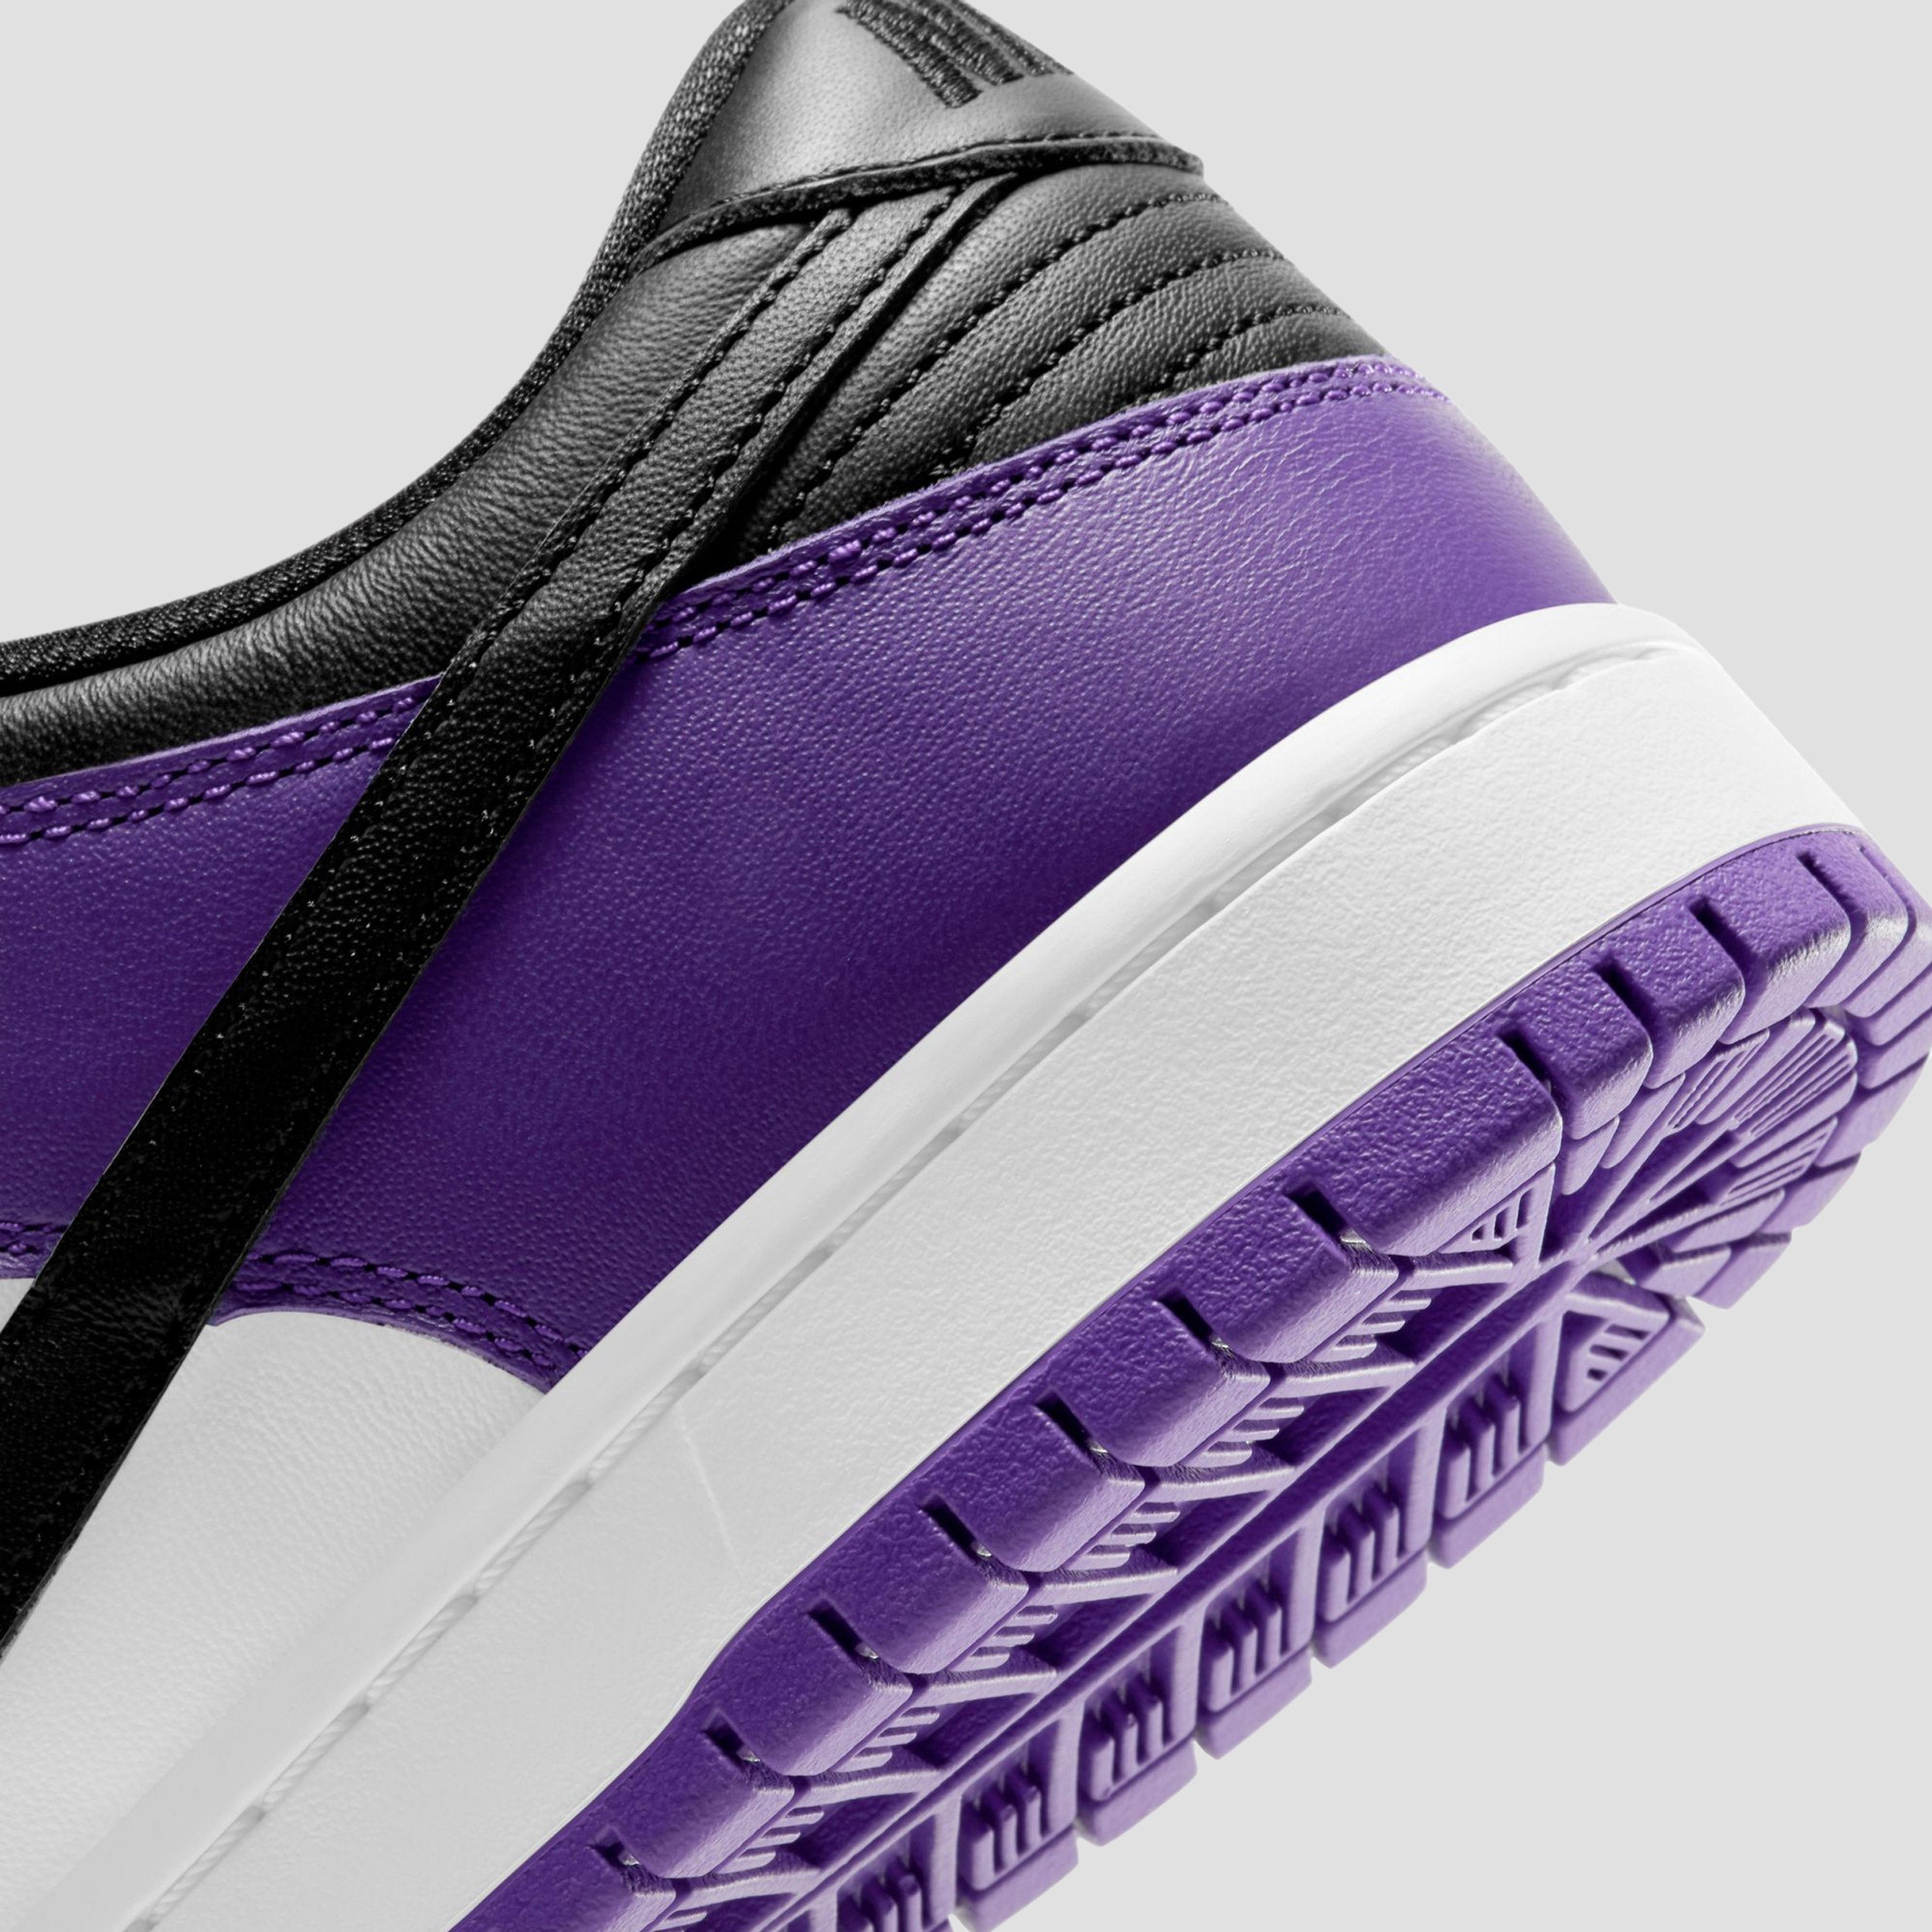 Nike SB Dunk Low Pro Shoes Court Purple / Black - White - Court 